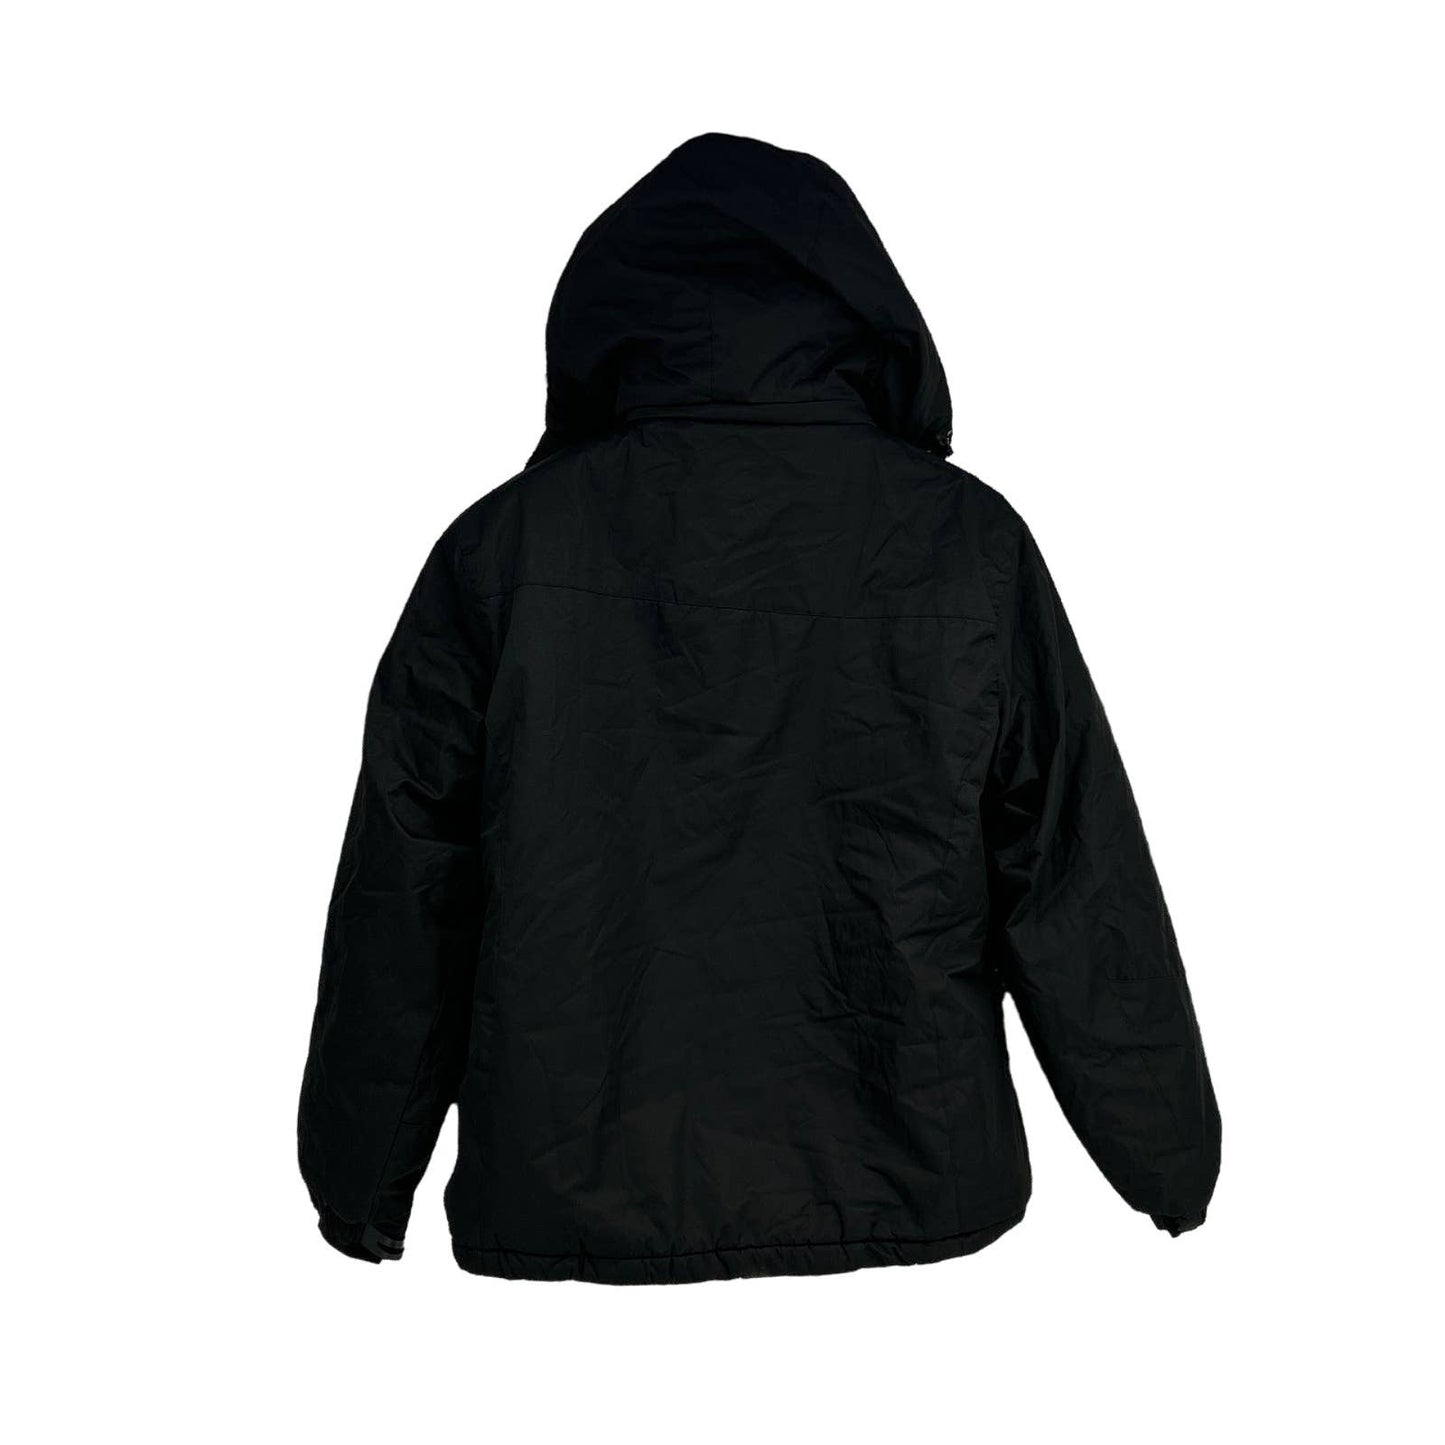 Winter coat XL Men's Black Gemyse